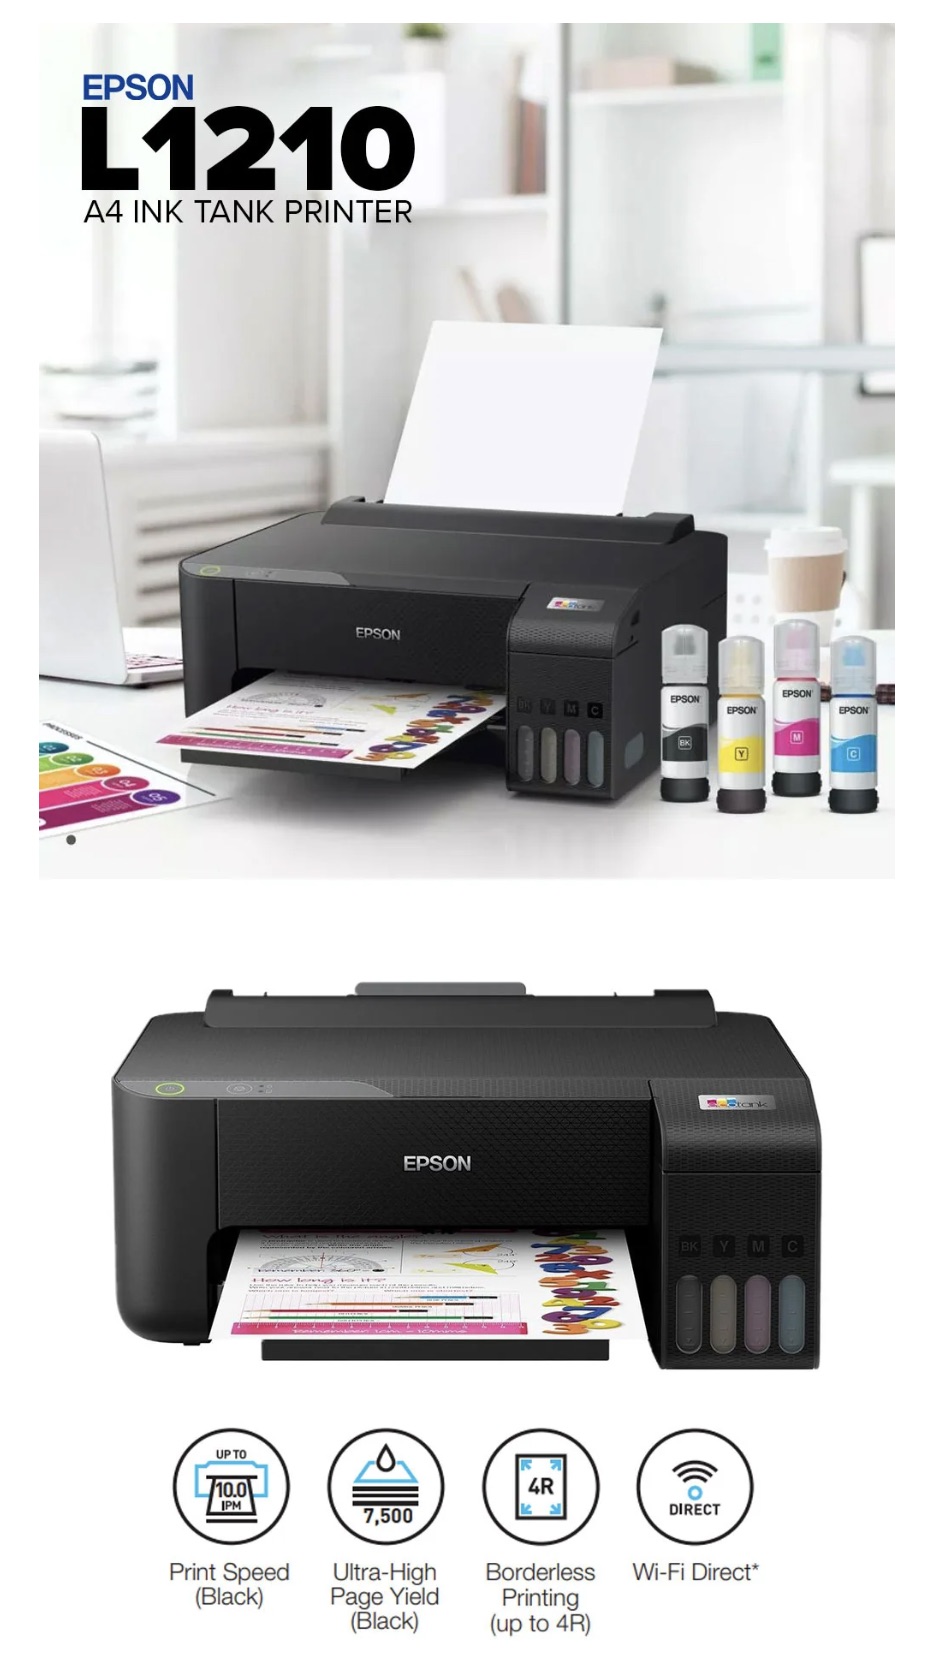 Epson-EcoTank-L1210-A4-Ink-Tank-Printer-Description